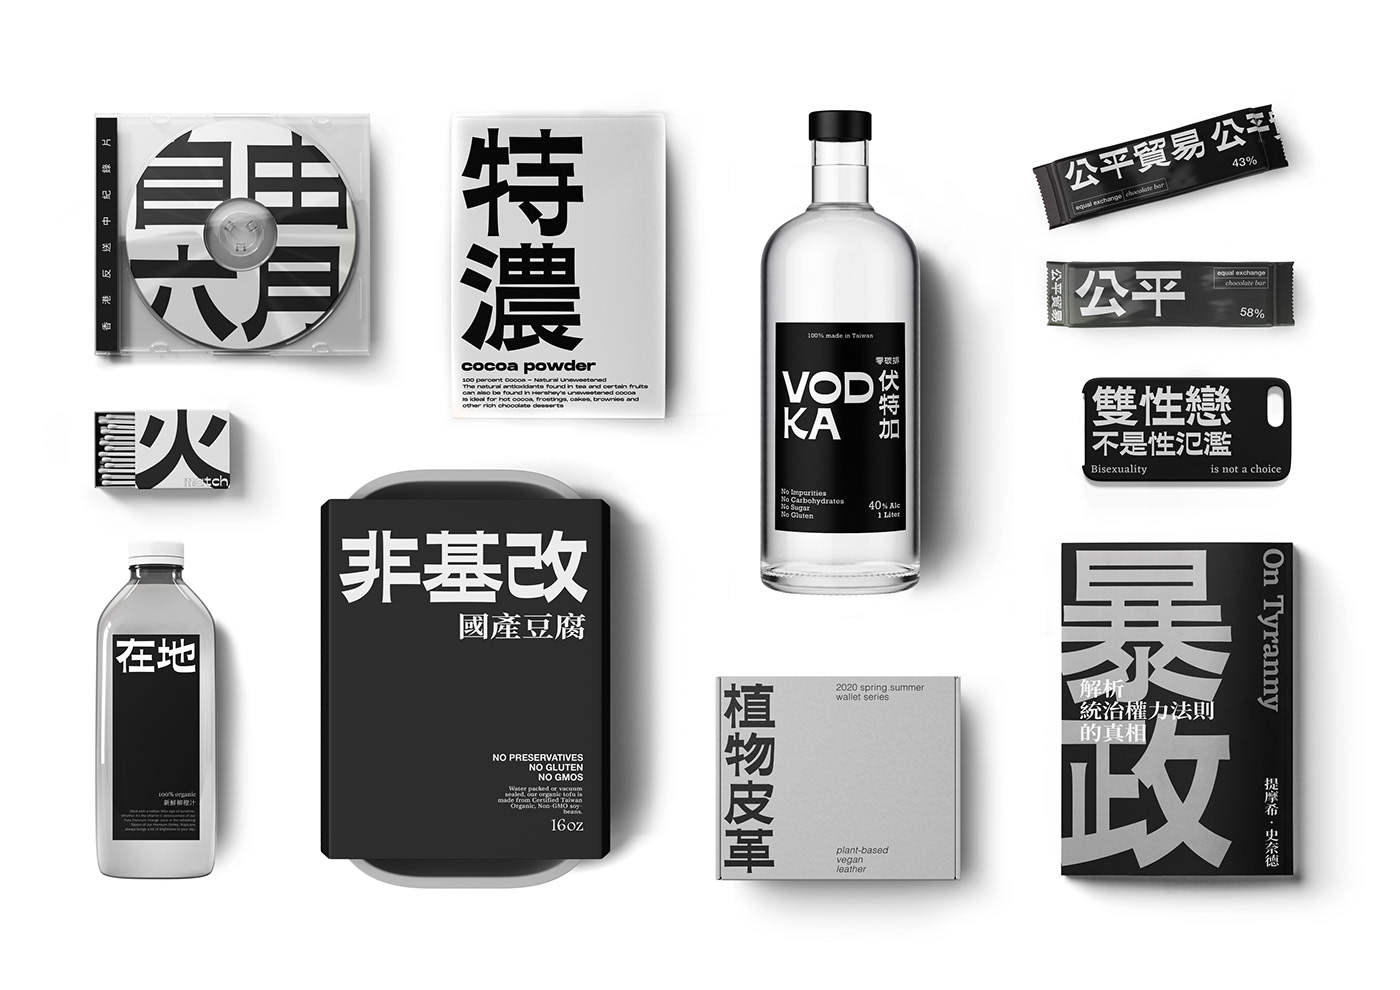 chinese font kanji Typeface typography   字型 字體設計